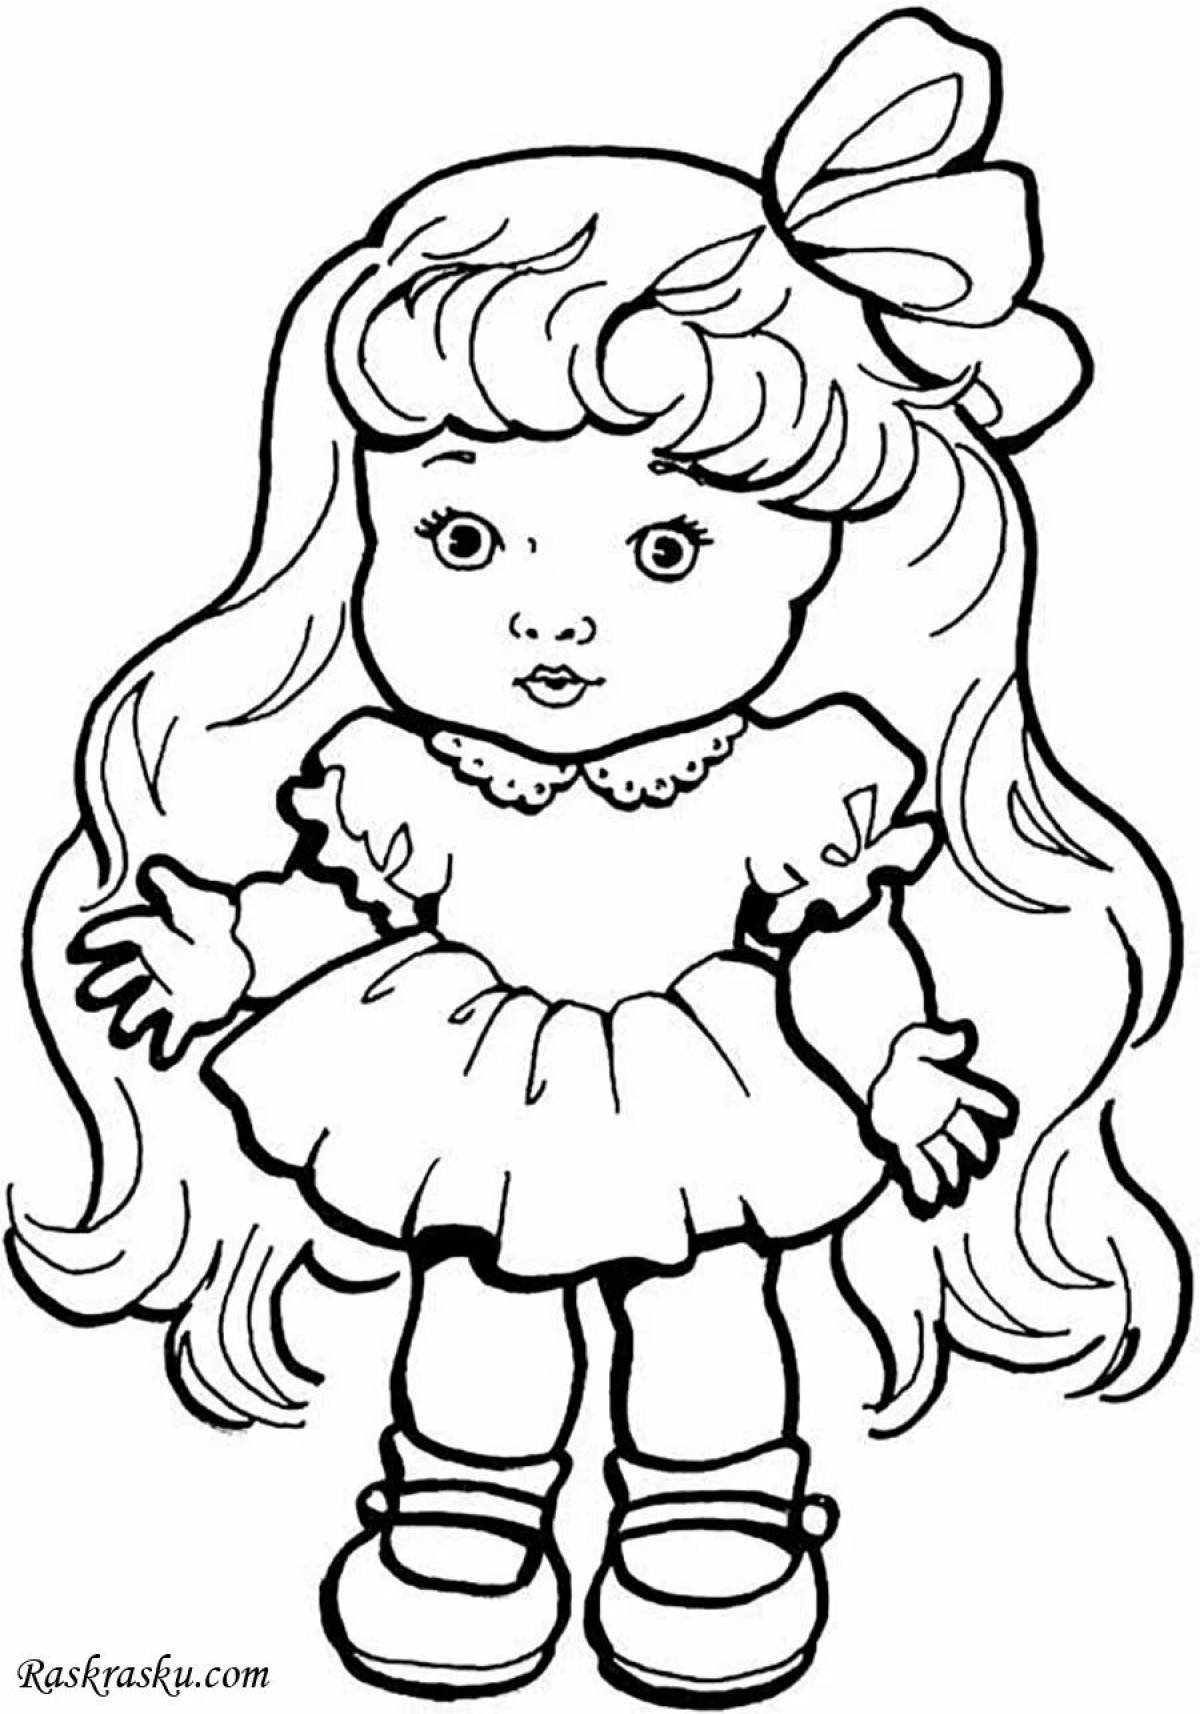 Кукла color-explosion coloring page для детей 5-6 лет